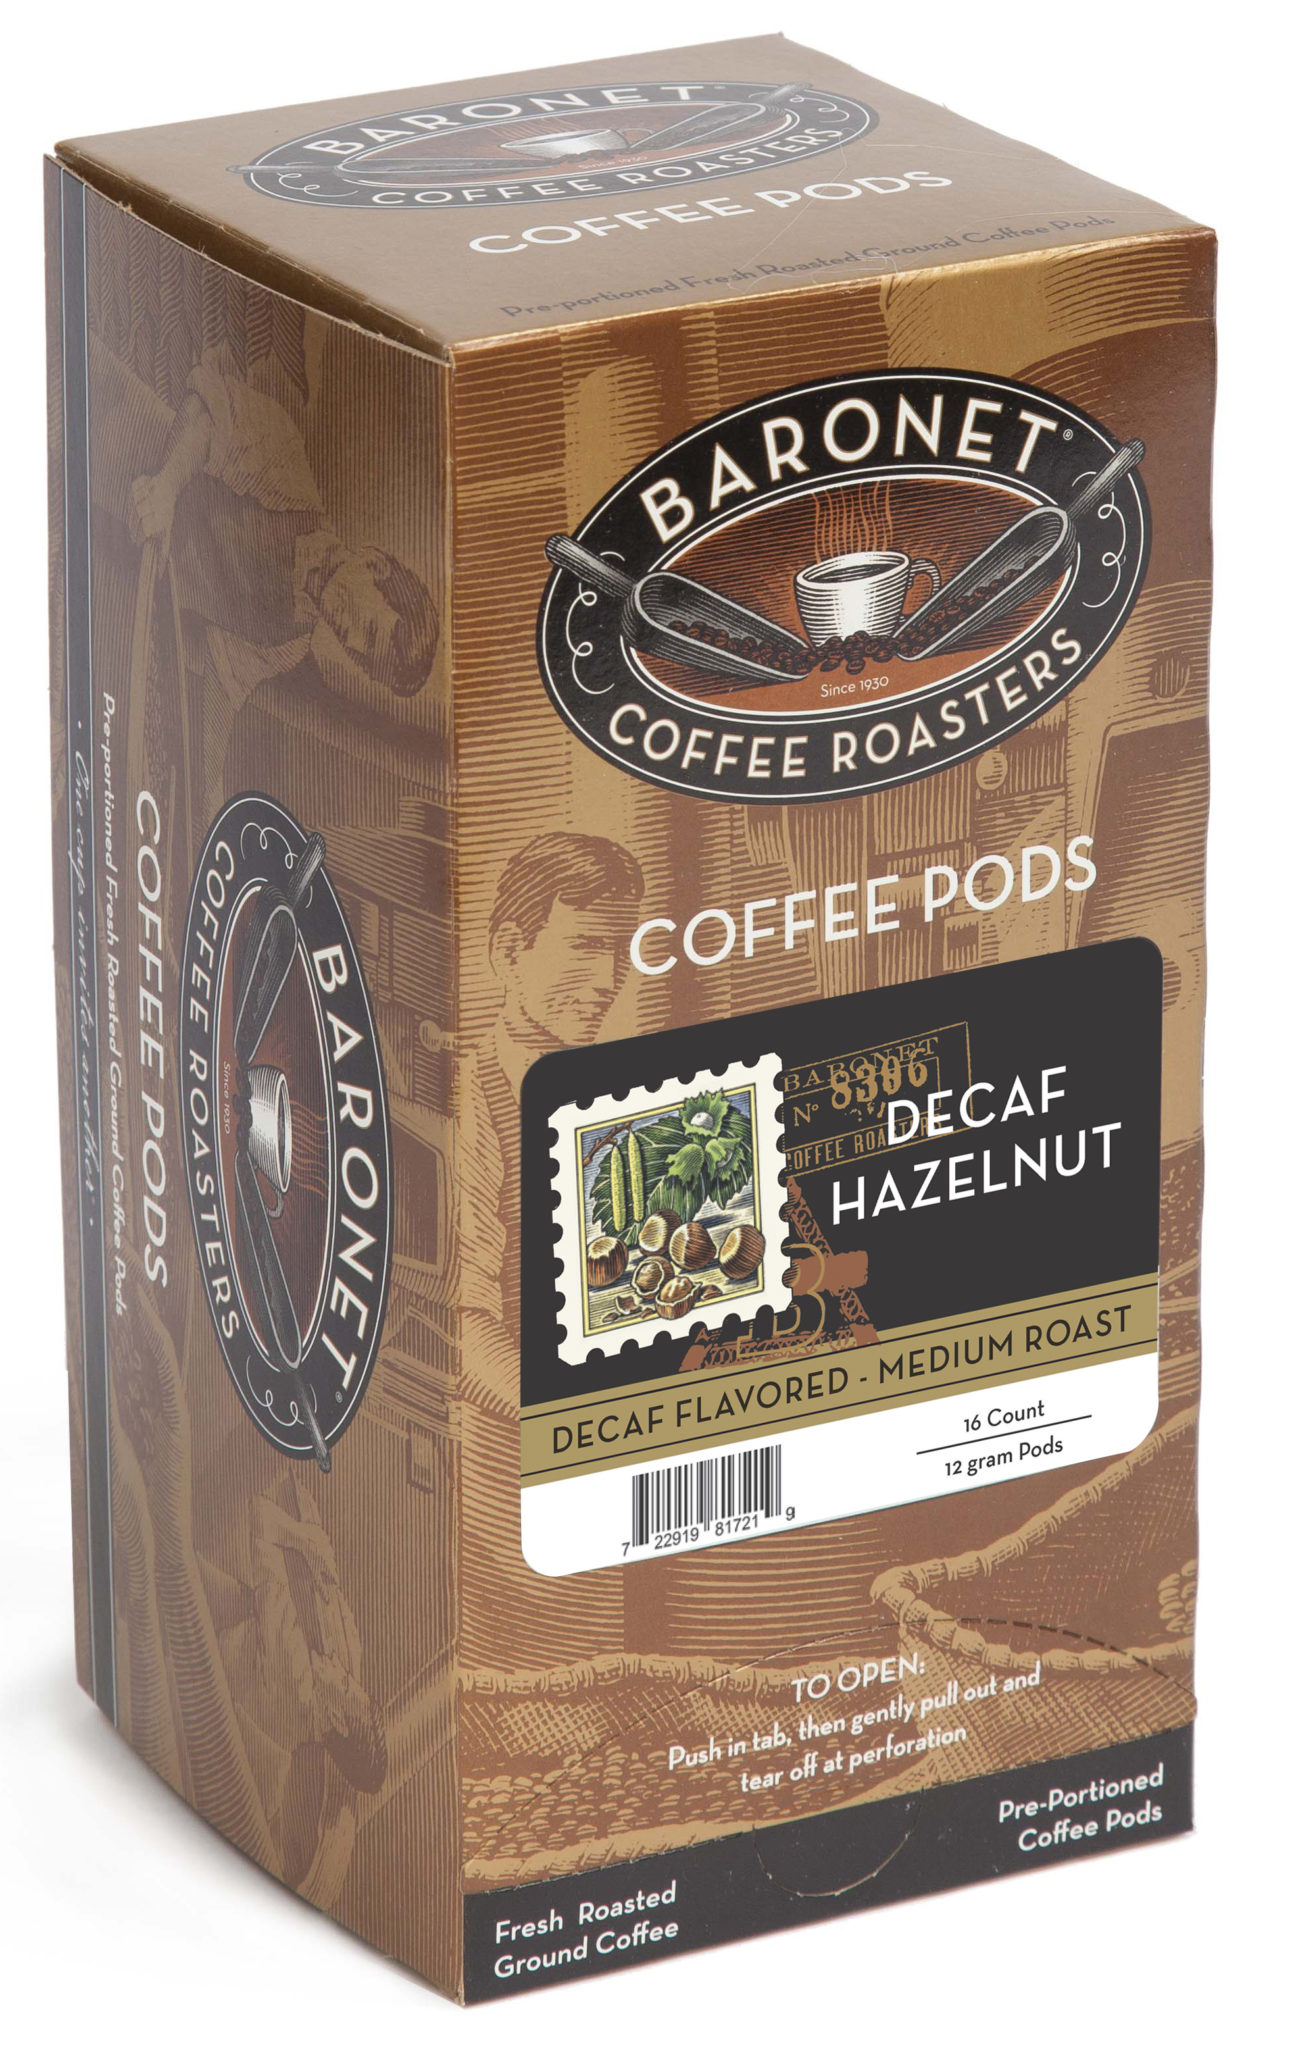 Decaf Hazelnut Baronet Coffee Roasters